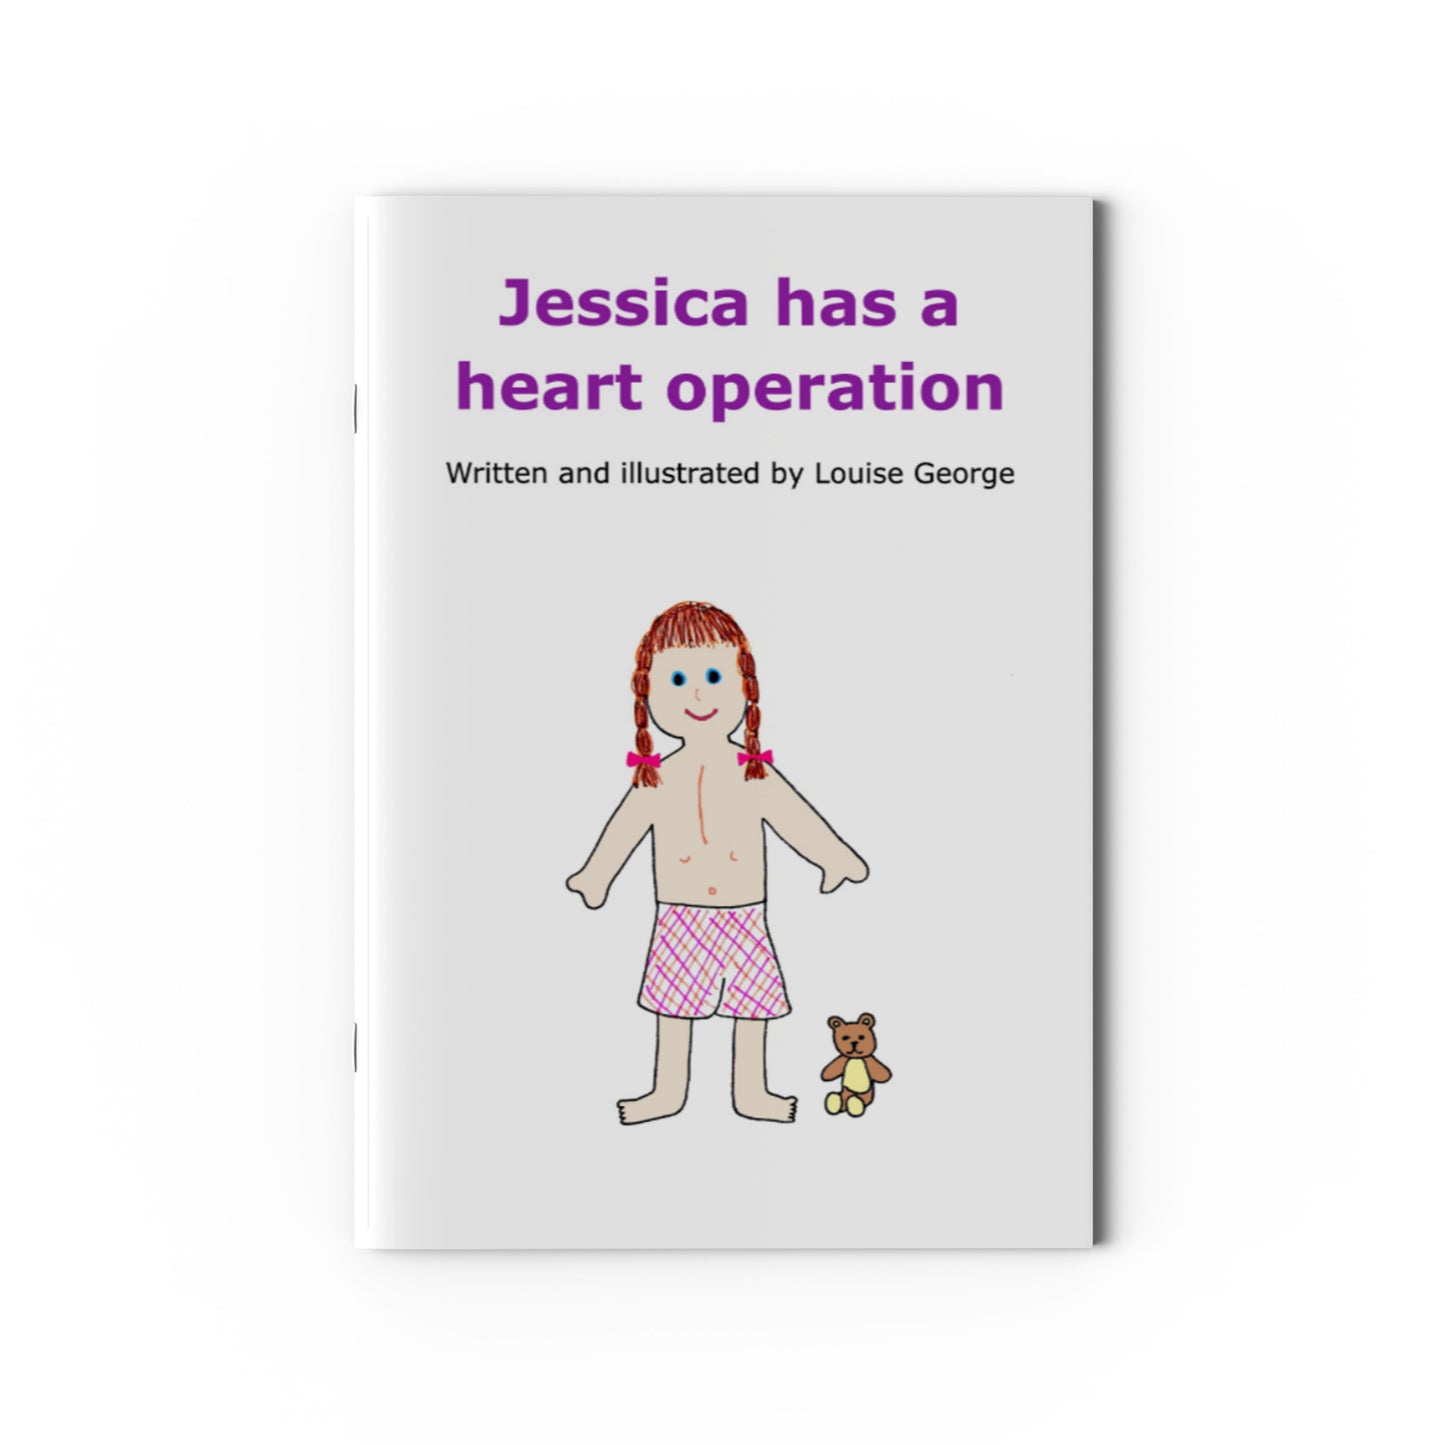 Jessica has a heart operation